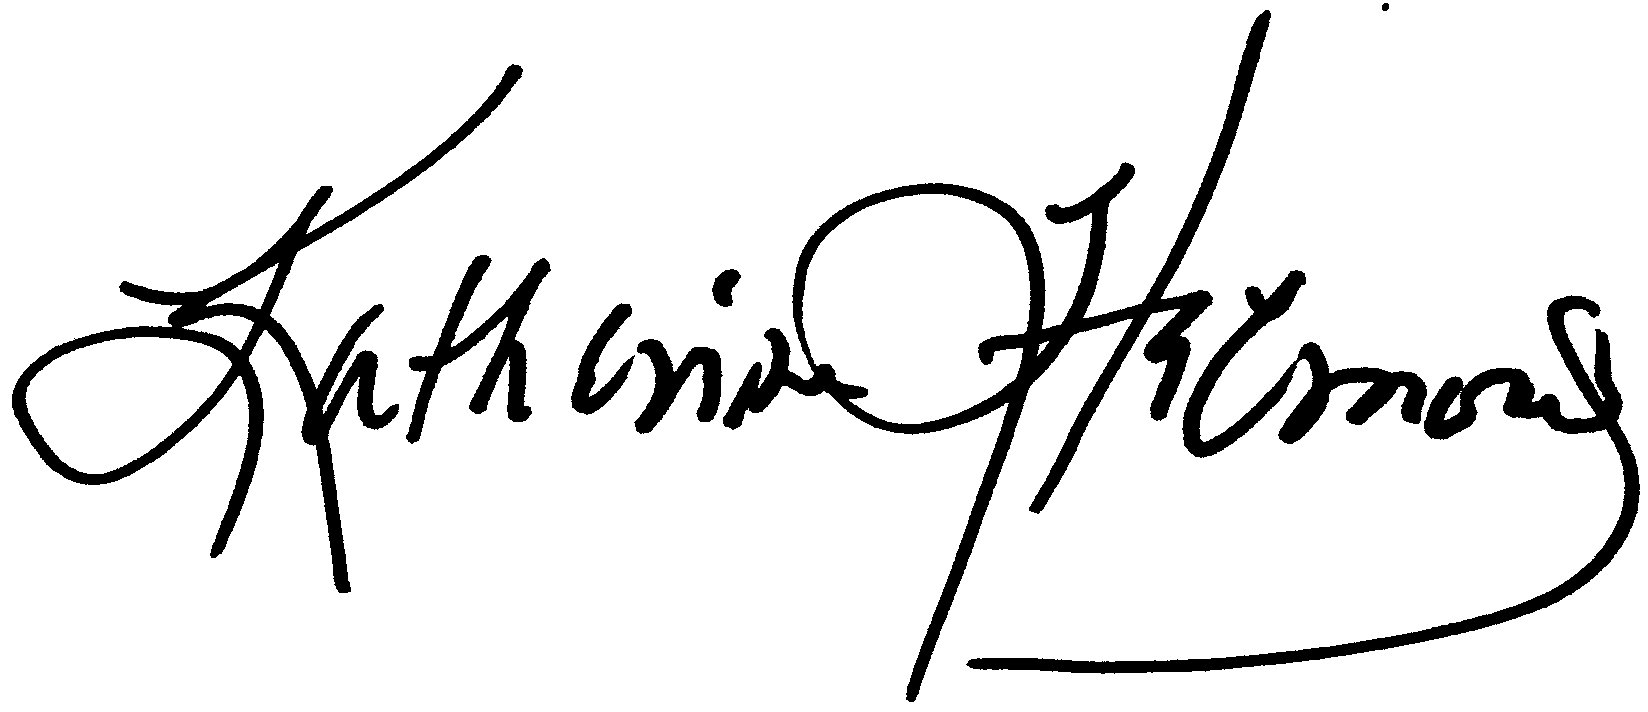 Katherine Helmond autograph facsimile